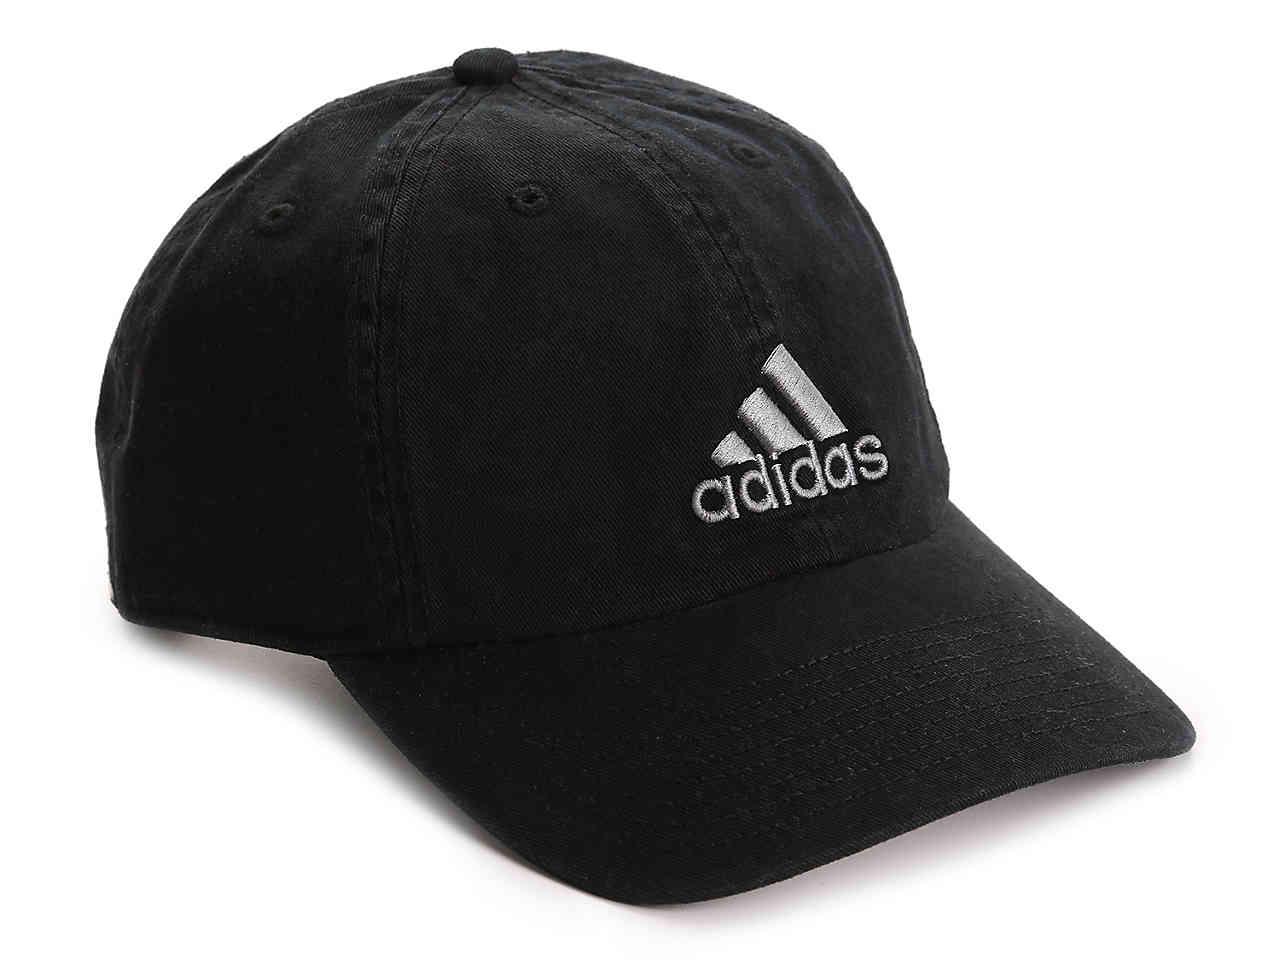 adidas Ultimate Ii Baseball Cap in Black for Men - Lyst